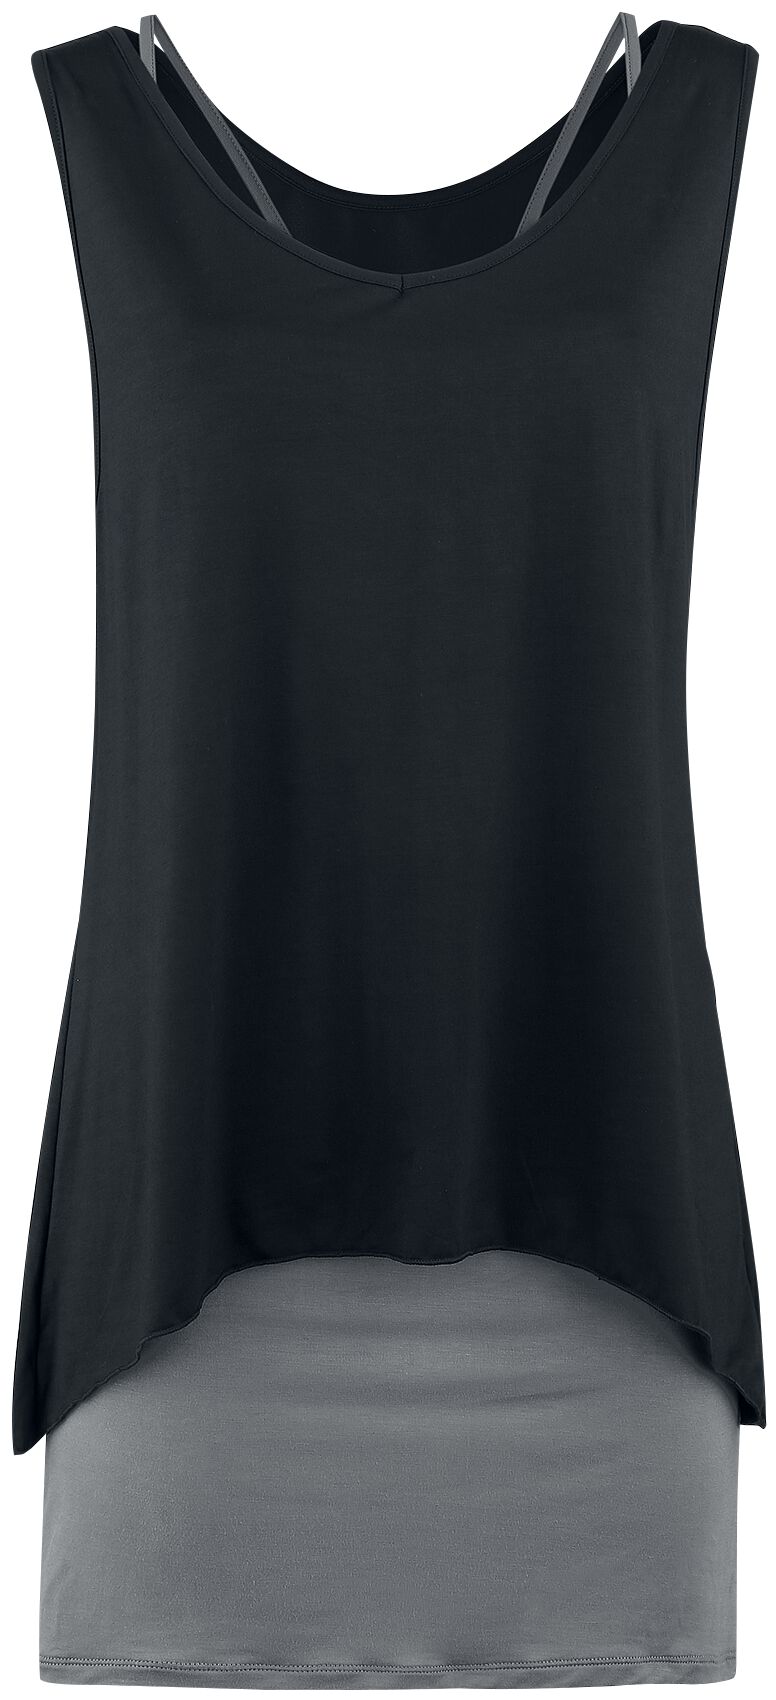 Black Premium by EMP Two in One Dress Kurzes Kleid schwarz charcoal in S